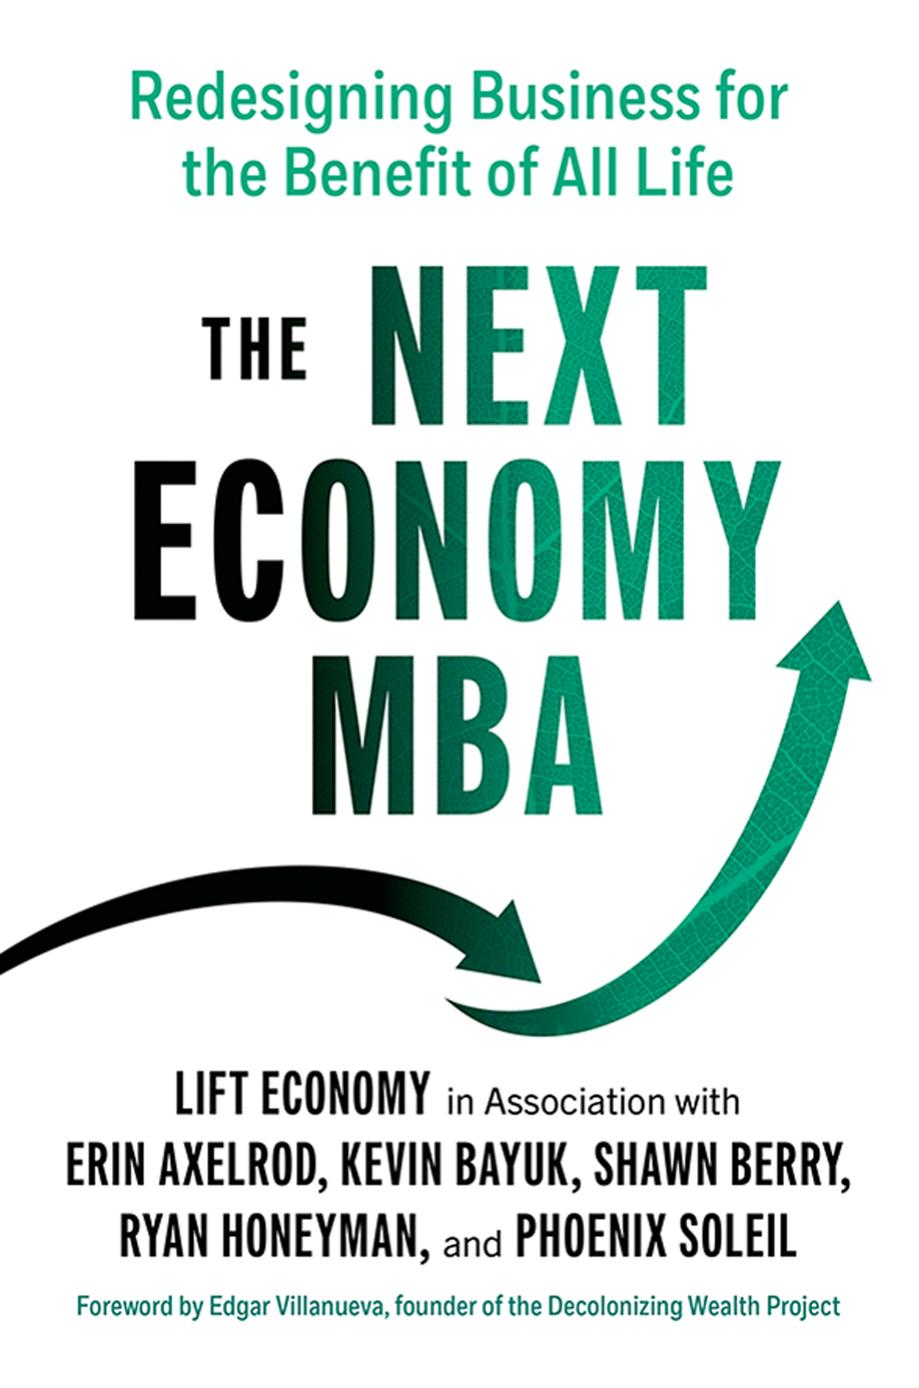 The Next Economy MBA by Erin Axelrod Kevin Bayuk Shawn Berry Ryan Honeyman Phoenix Soleil